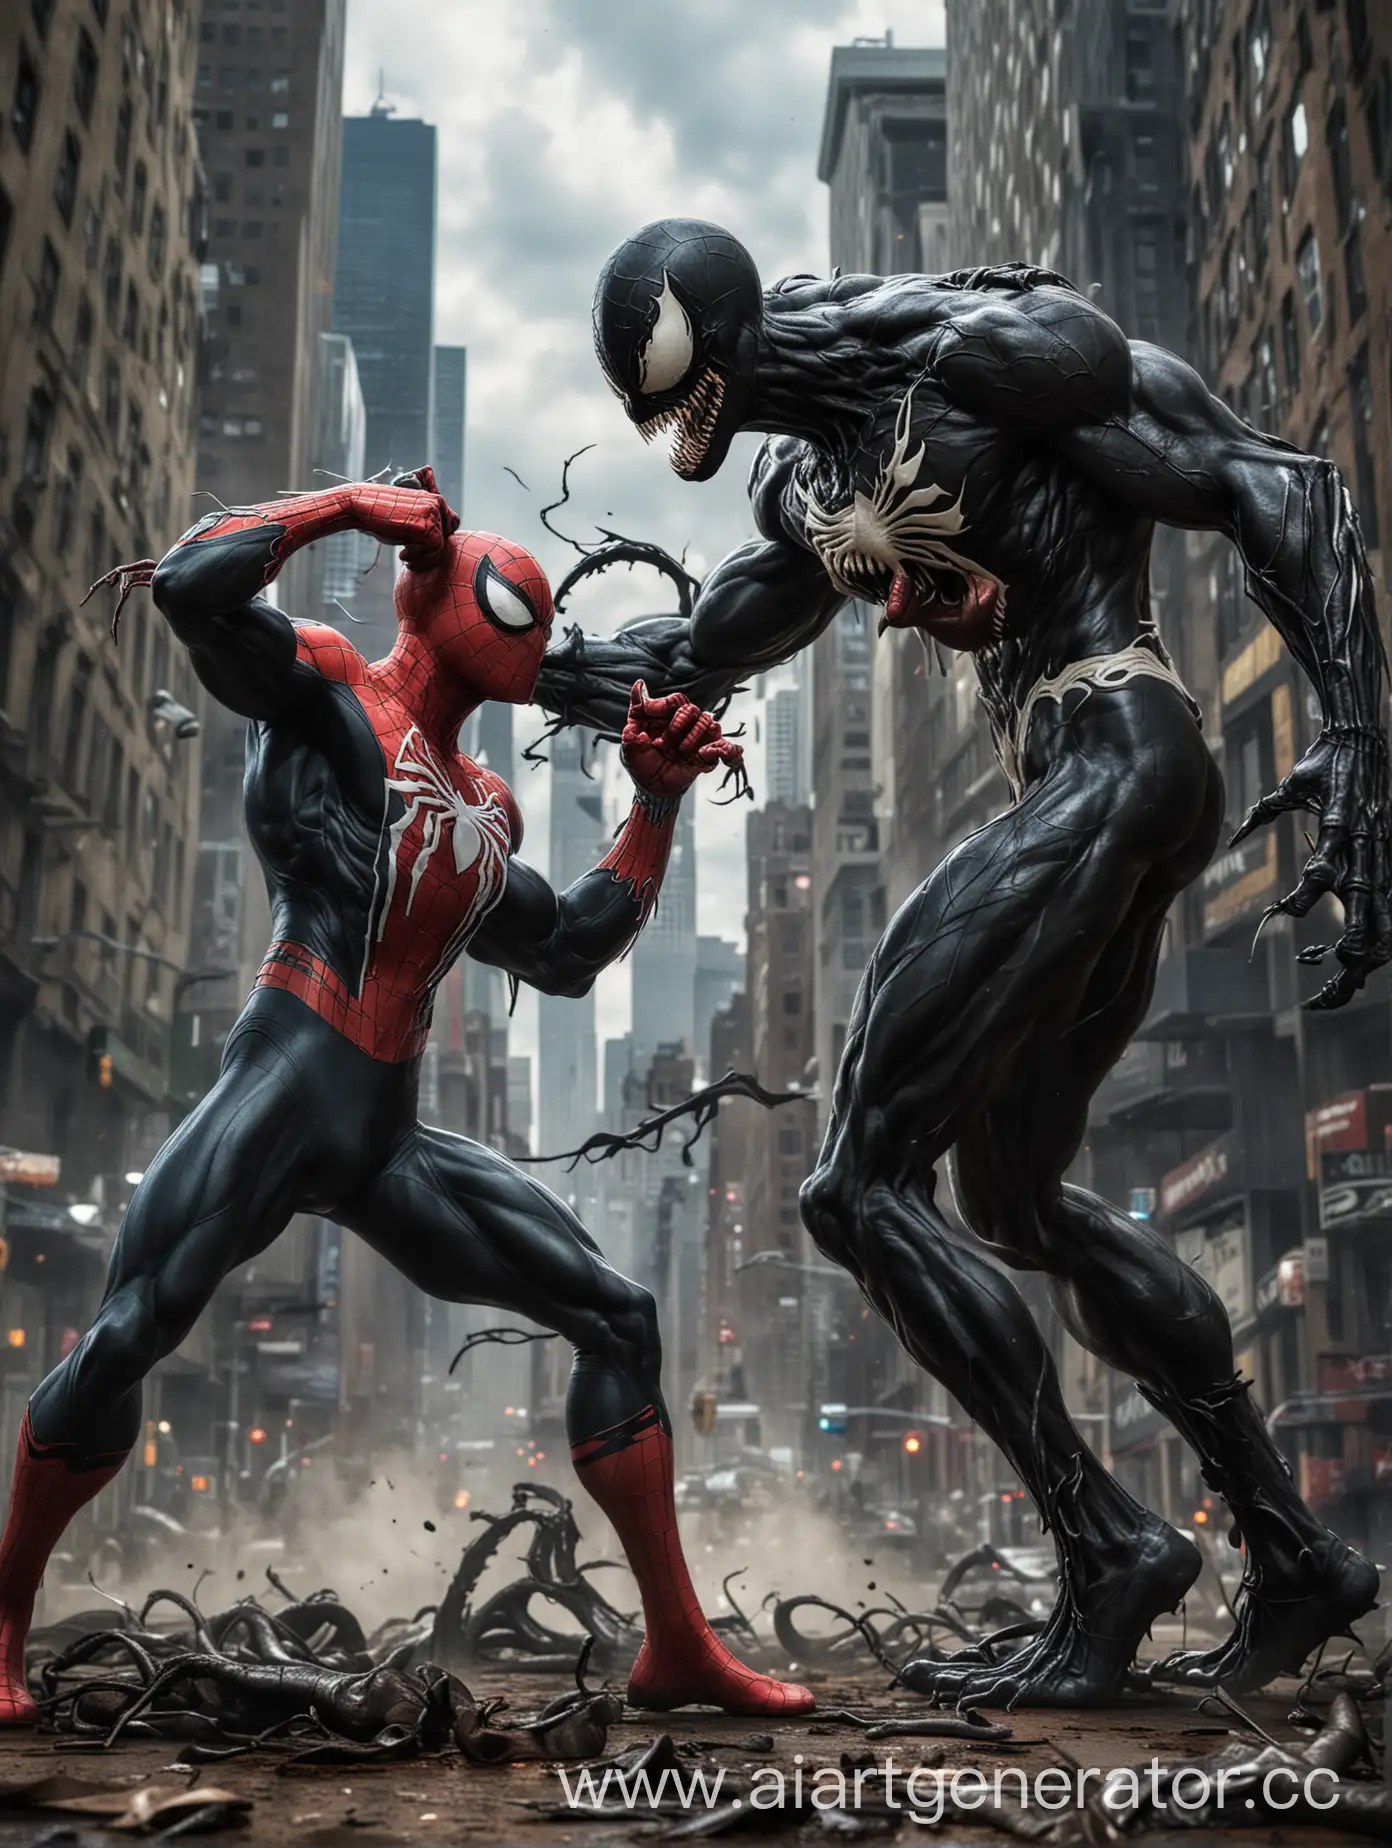 Epic-Showdown-SpiderMan-Battles-Venom-in-Cityscape